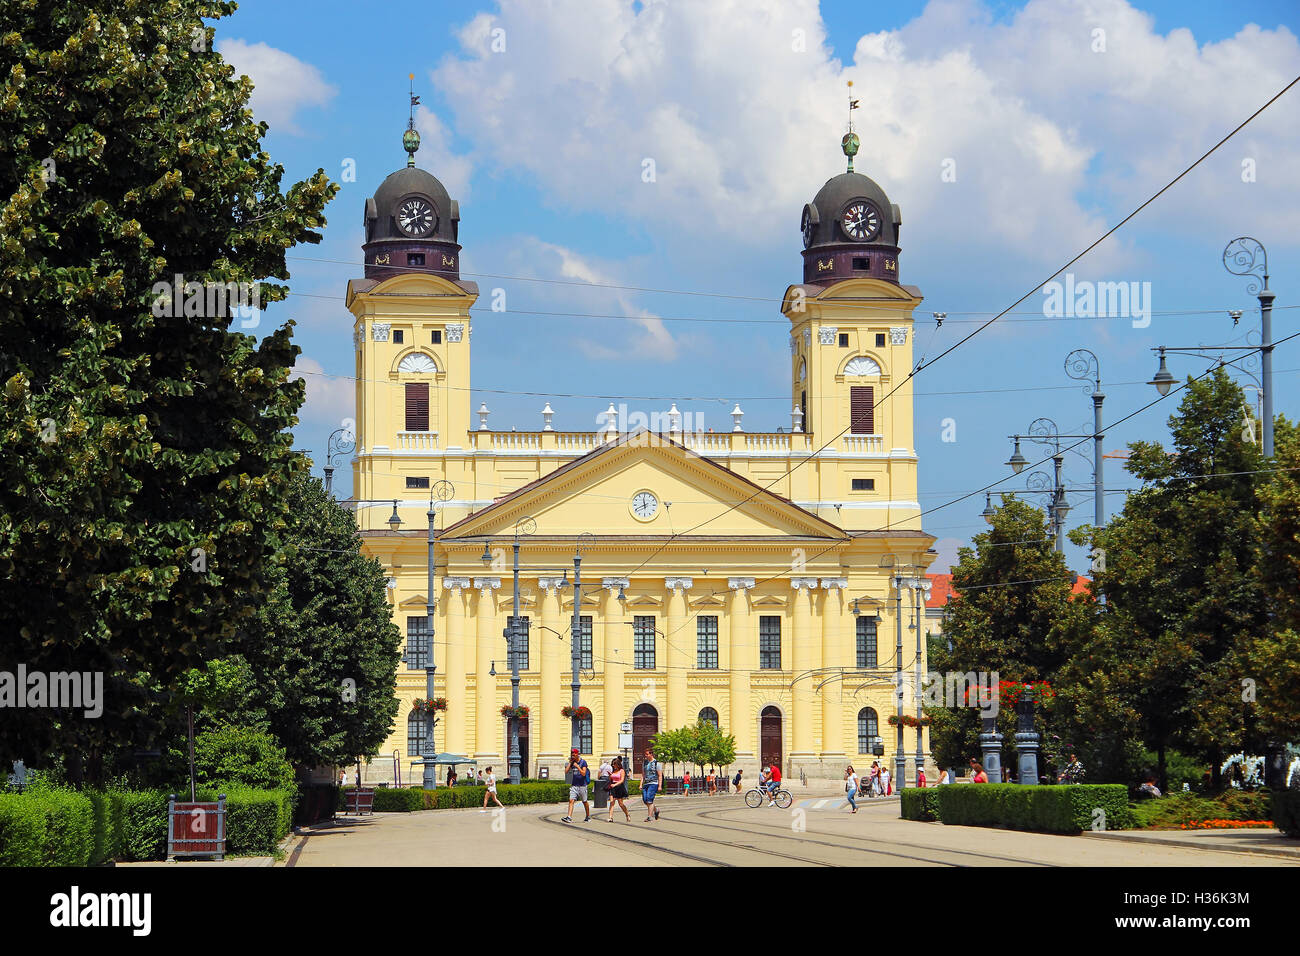 DEBRECEN, HONGRIE - 1 juillet 2016 : Kossuth ter, la place centrale de Debrecen, avec grande Eglise Réformée (Nagytemplom) Banque D'Images